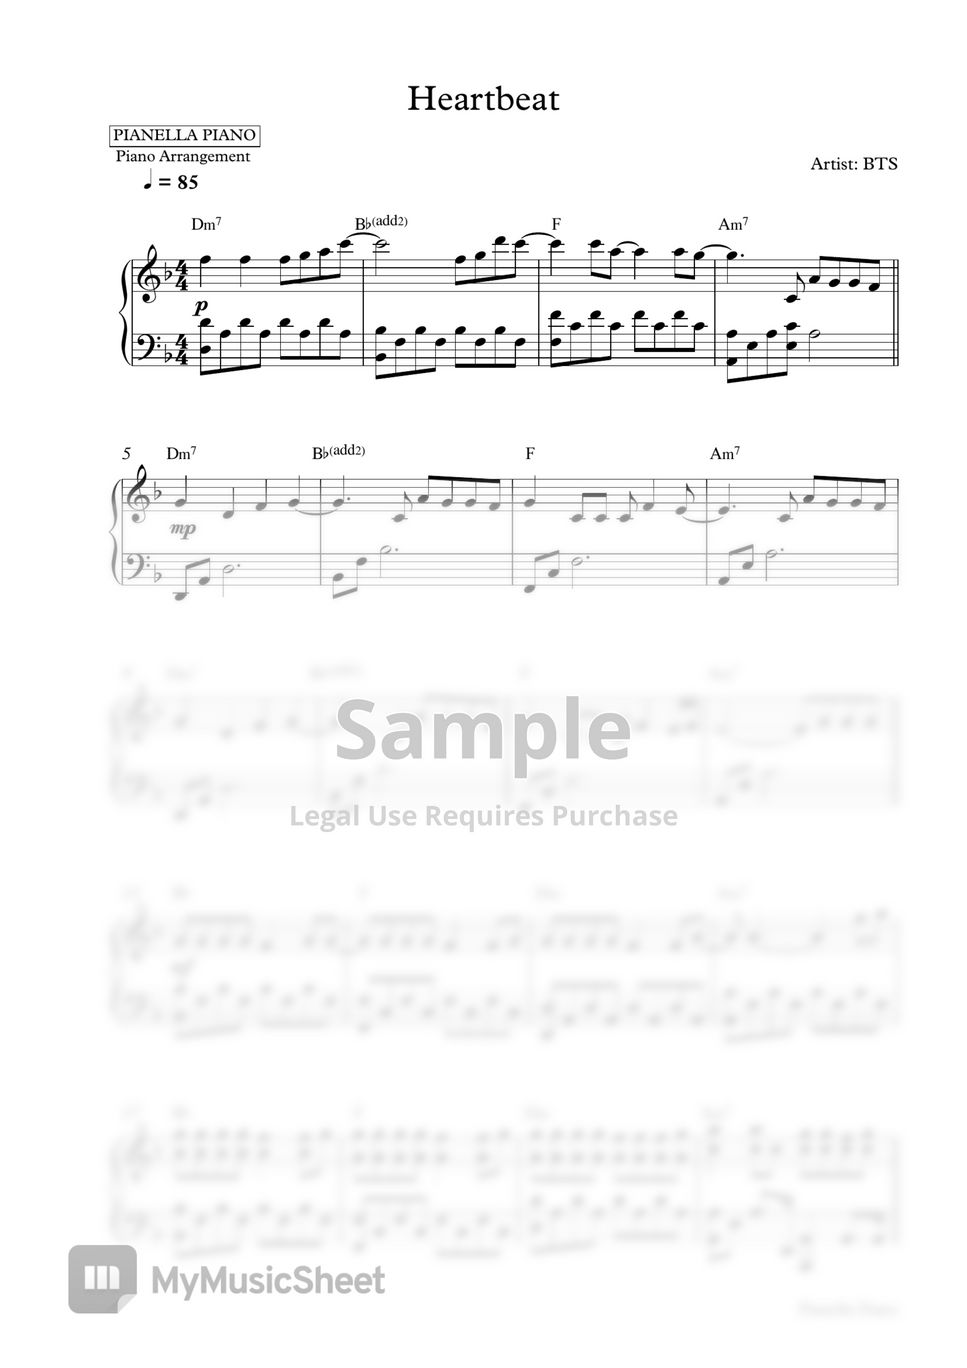 BTS - Heartbeat (Piano Sheet) by Pianella Piano